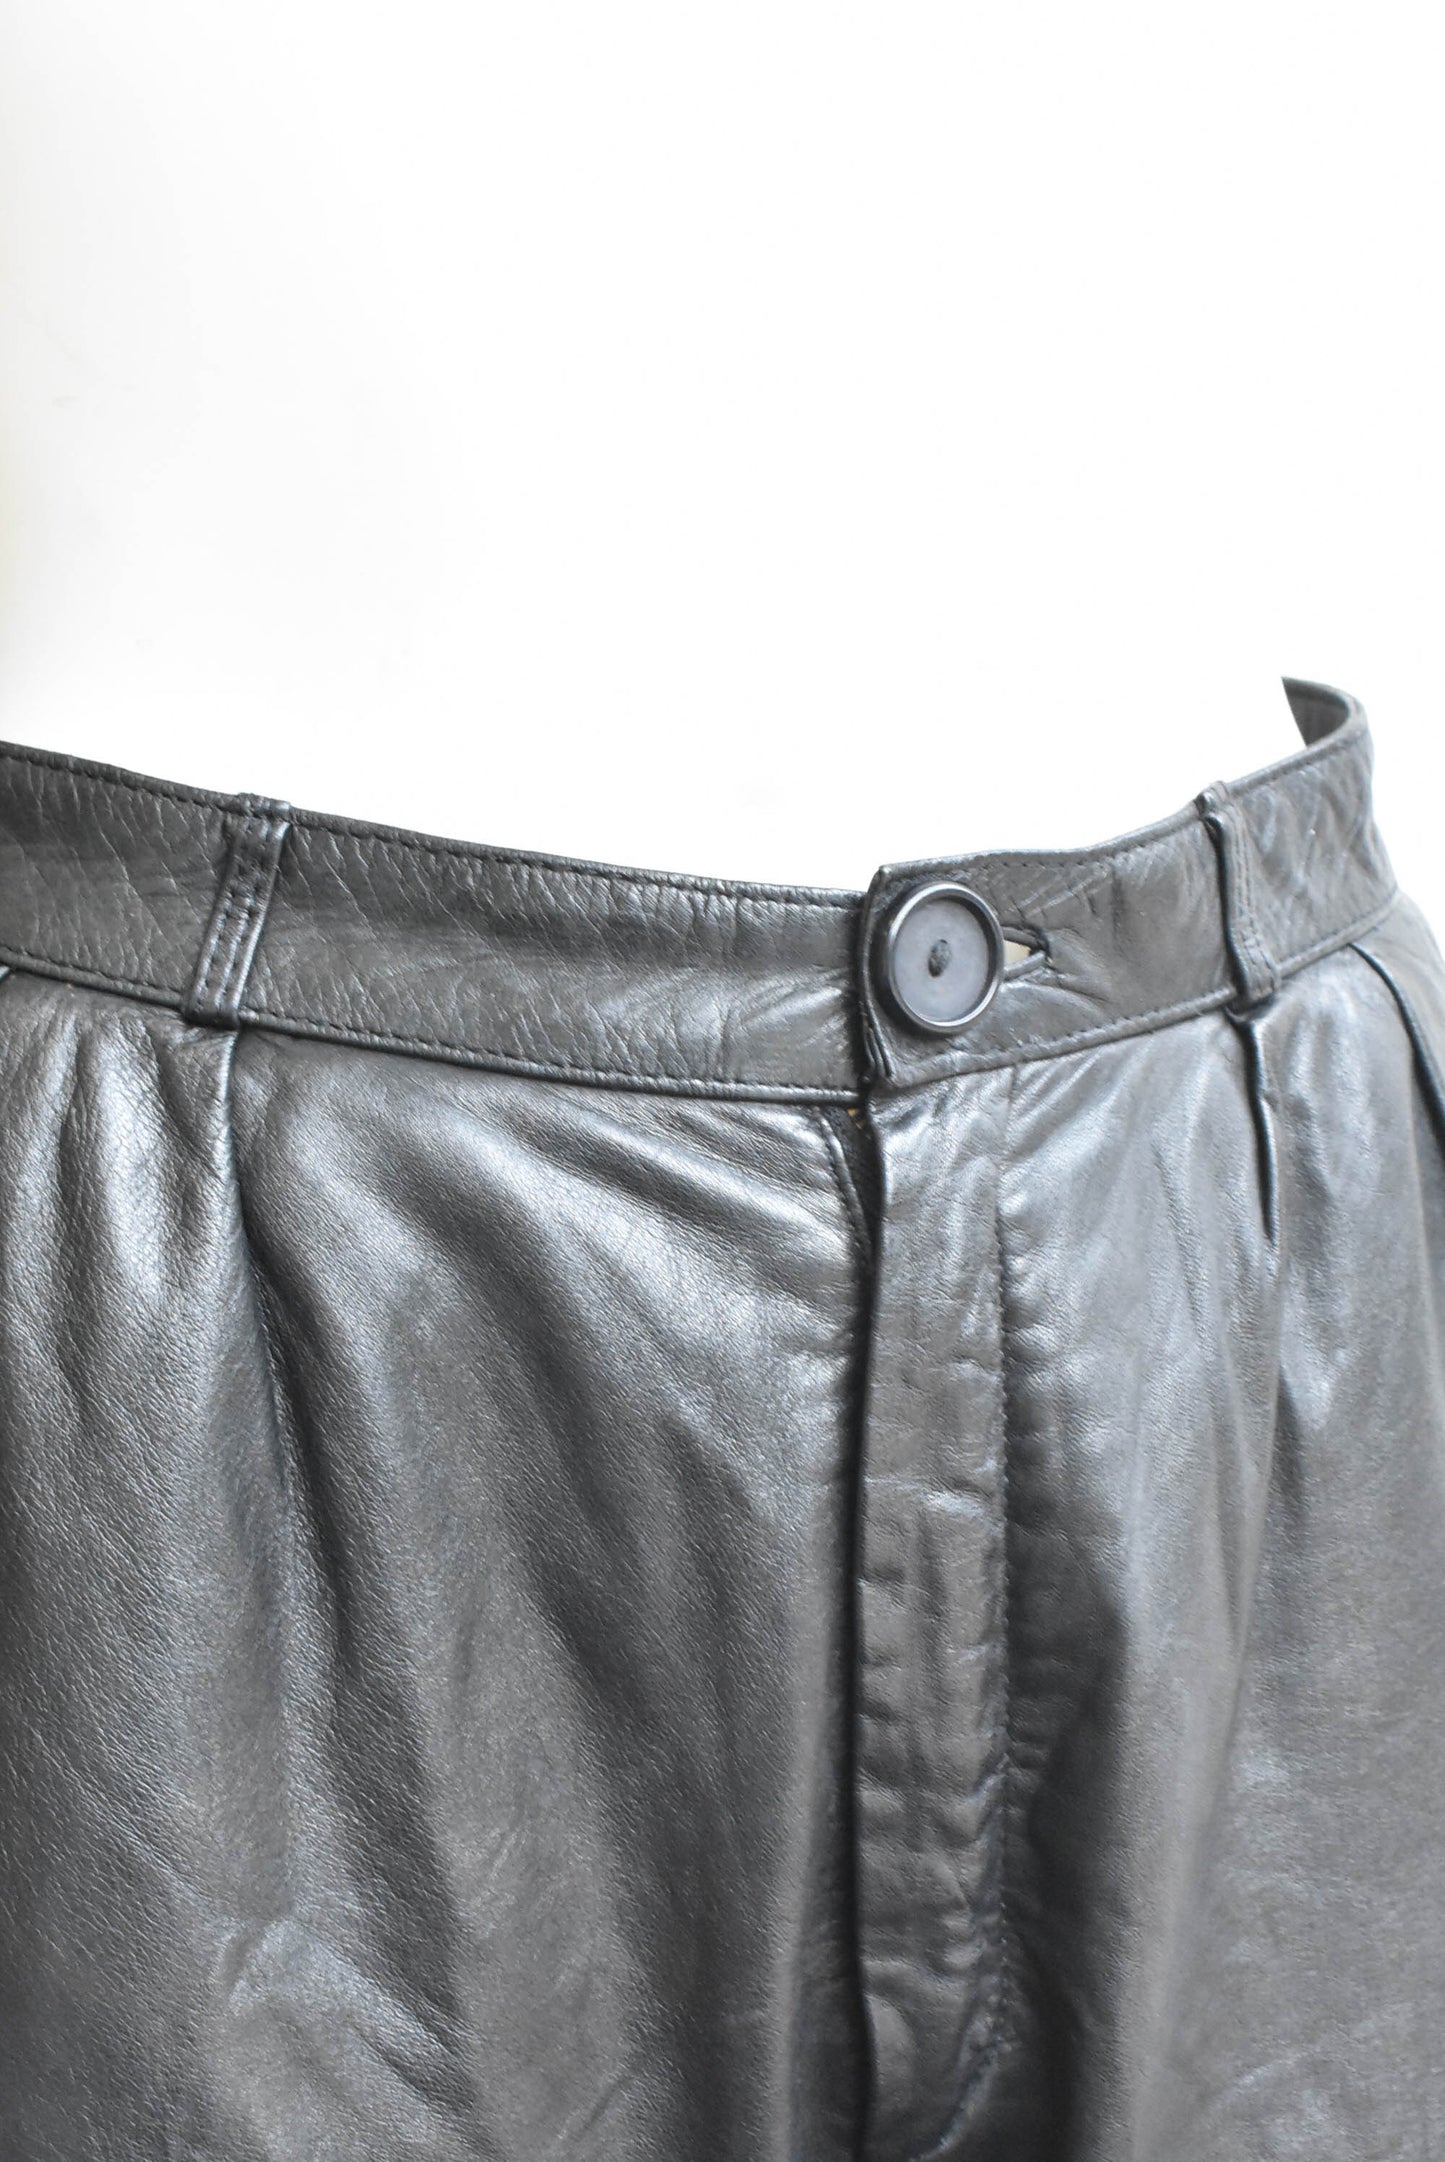 Wilsons black leather pants, 8